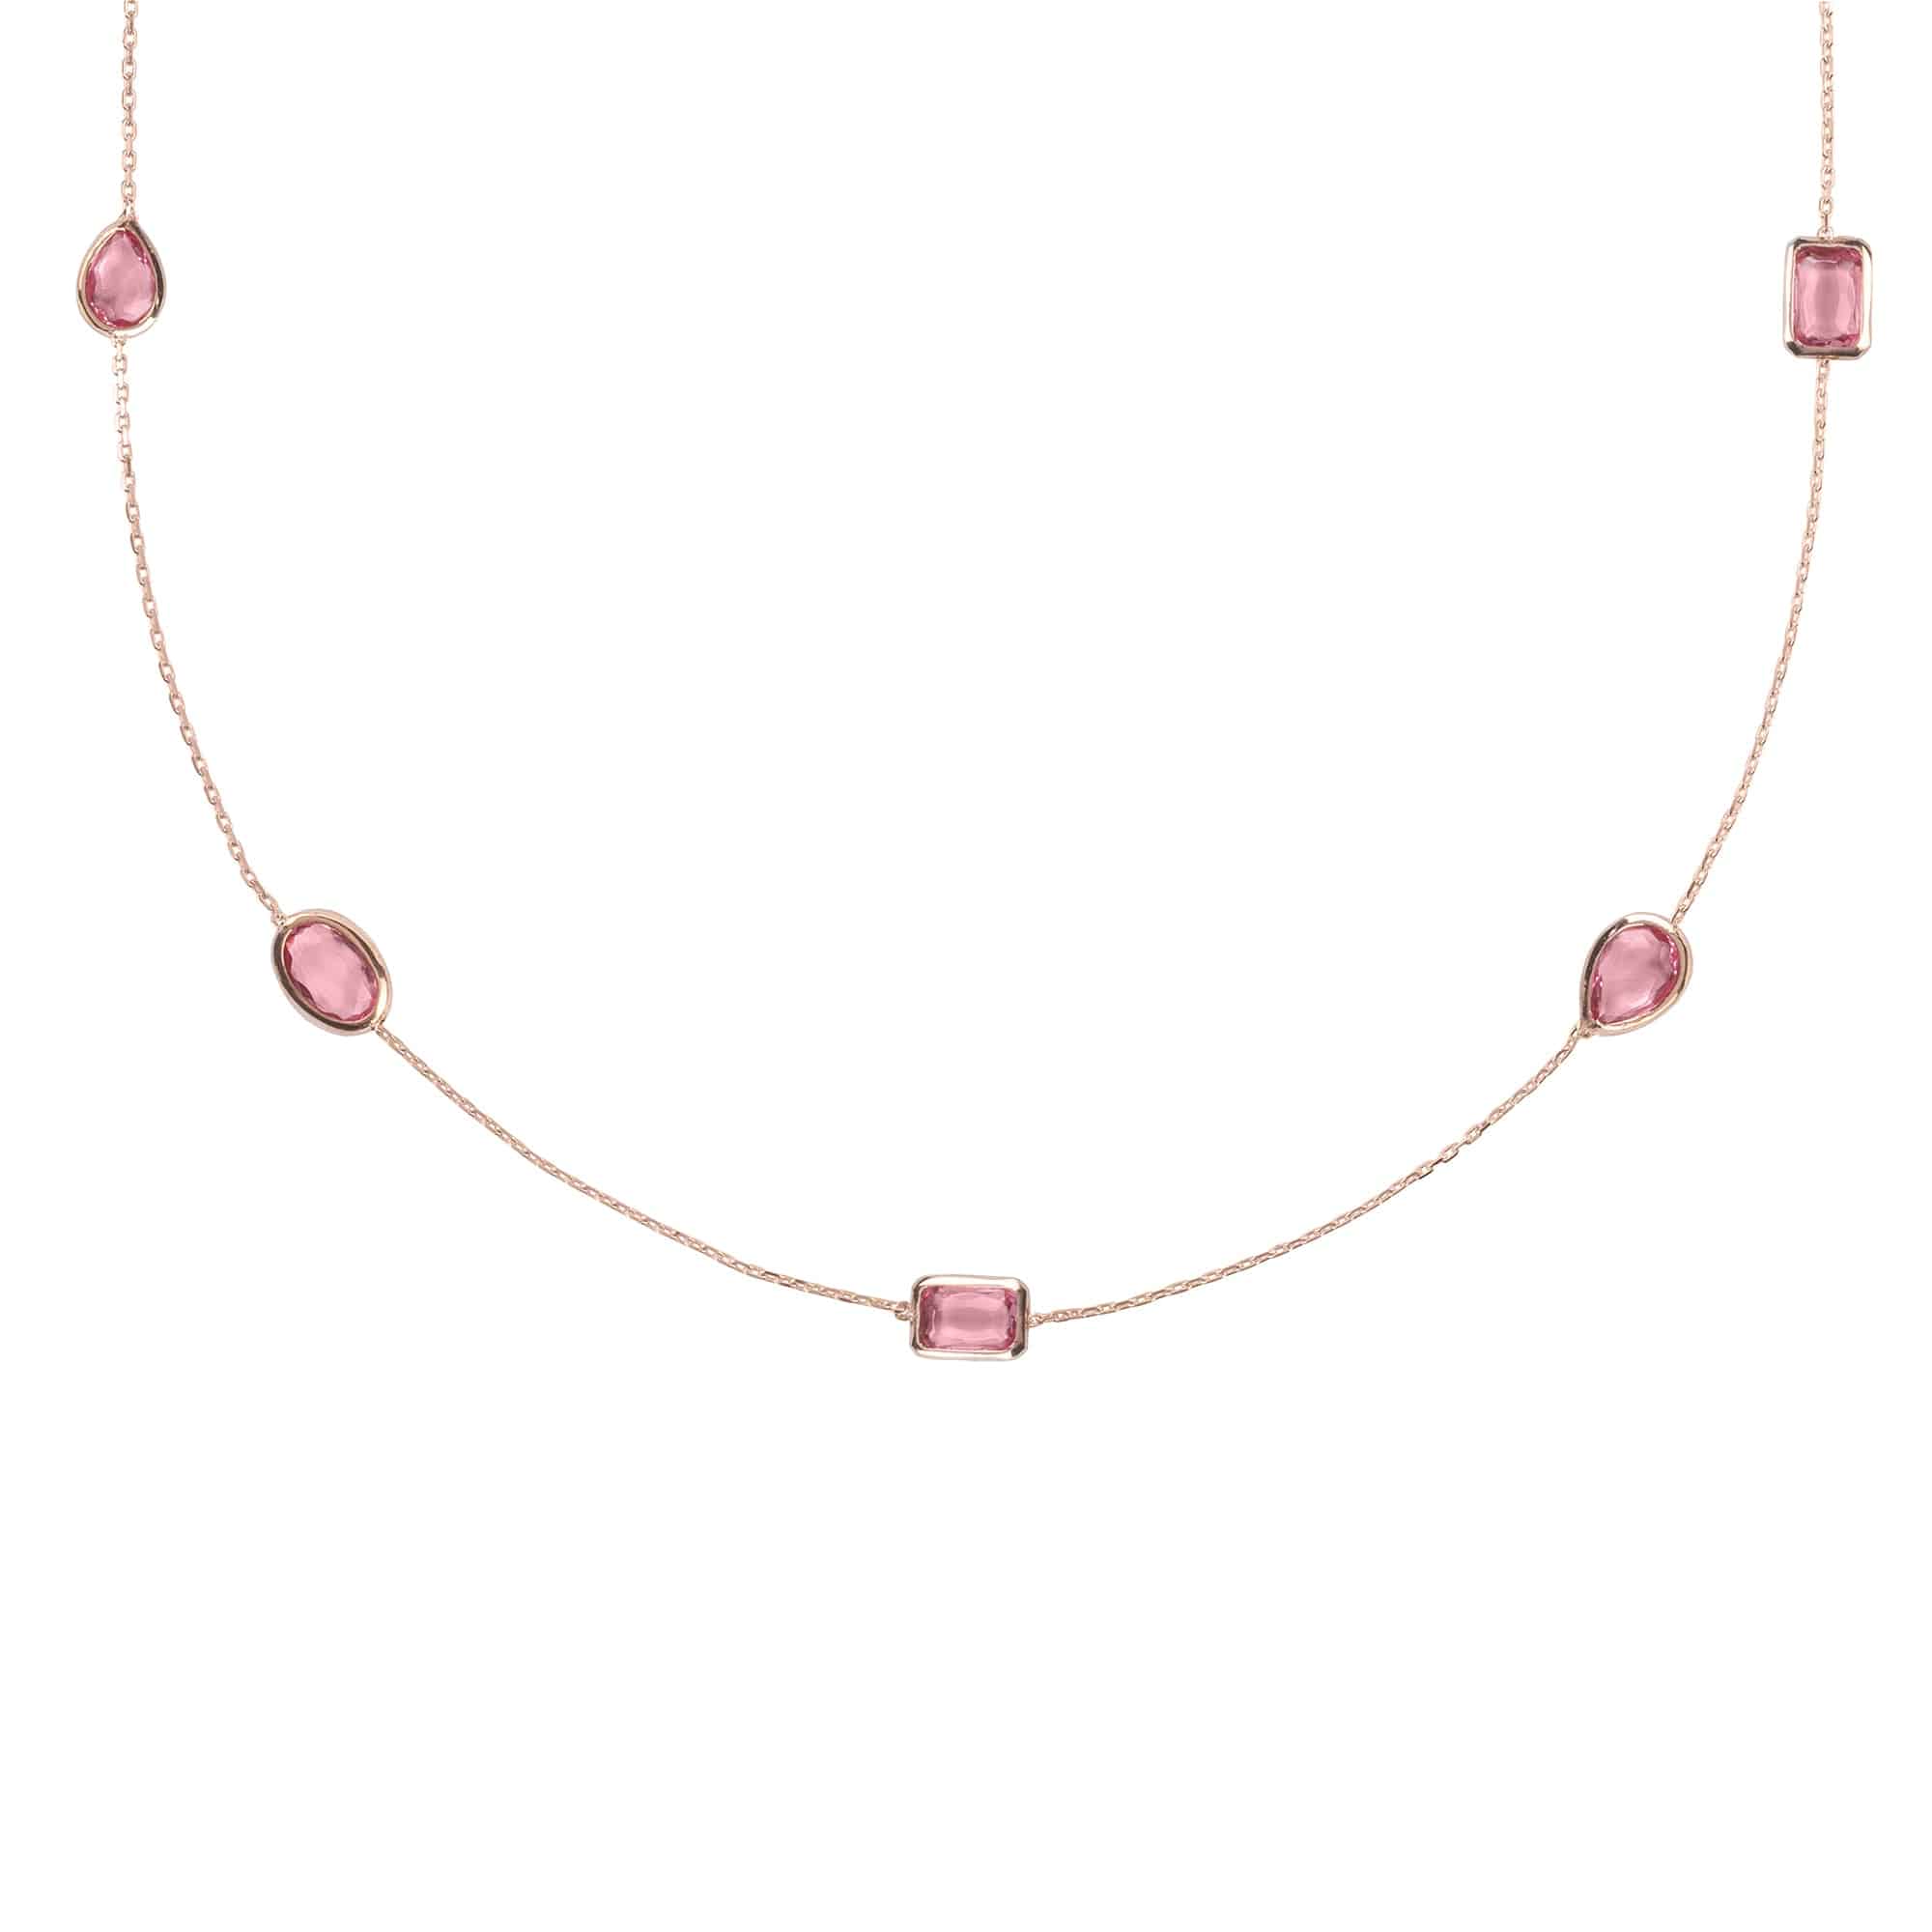 Venice 120Cm Long Chain Necklace Rosegold Pink Tourmaline - LATELITA Necklaces